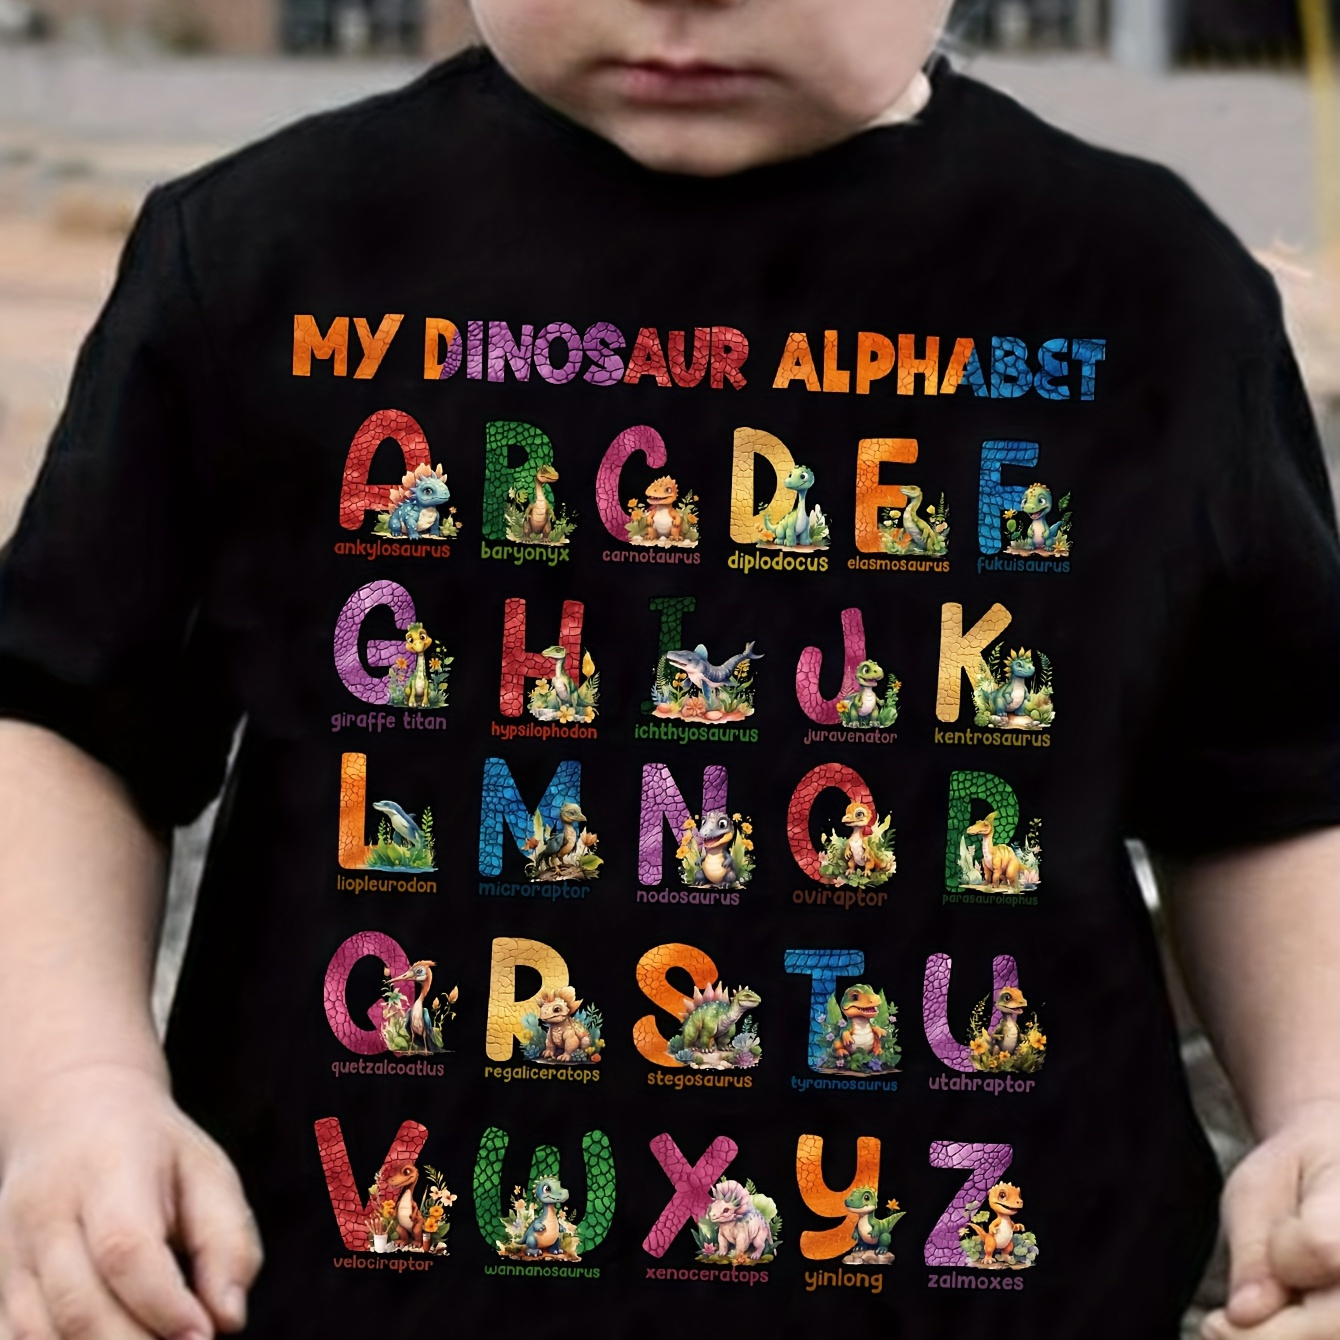 

Boys Dinosaur Alphabet T-shirt, Colorful Letter Print, Cartoon Graphic, Casual Summer Tee